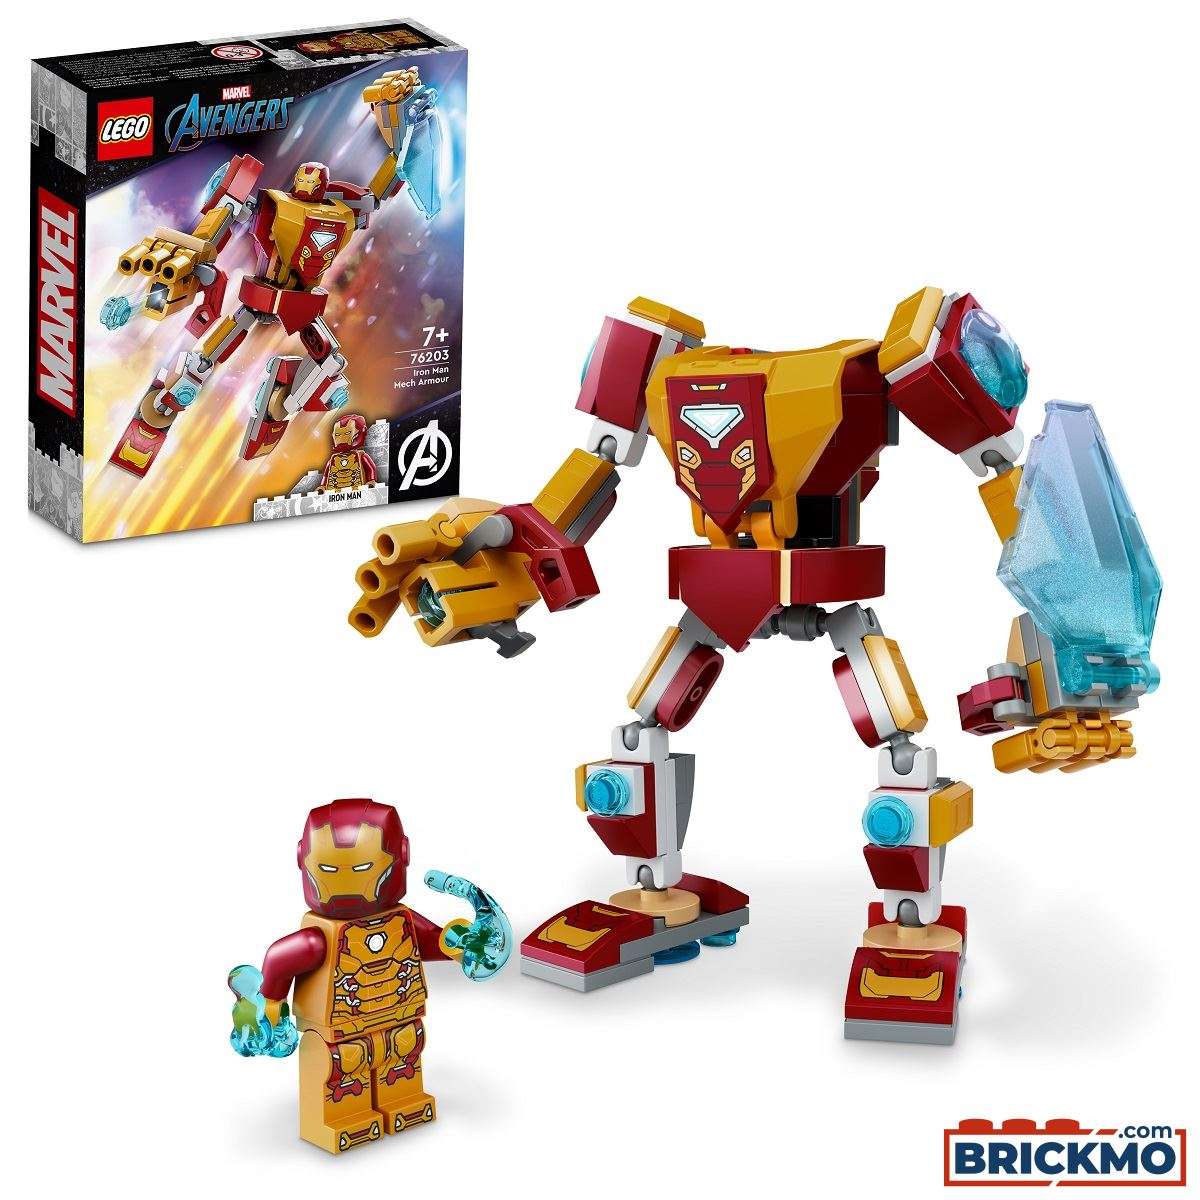 LEGO Marvel Super Heroes Iron Man Mech 76203